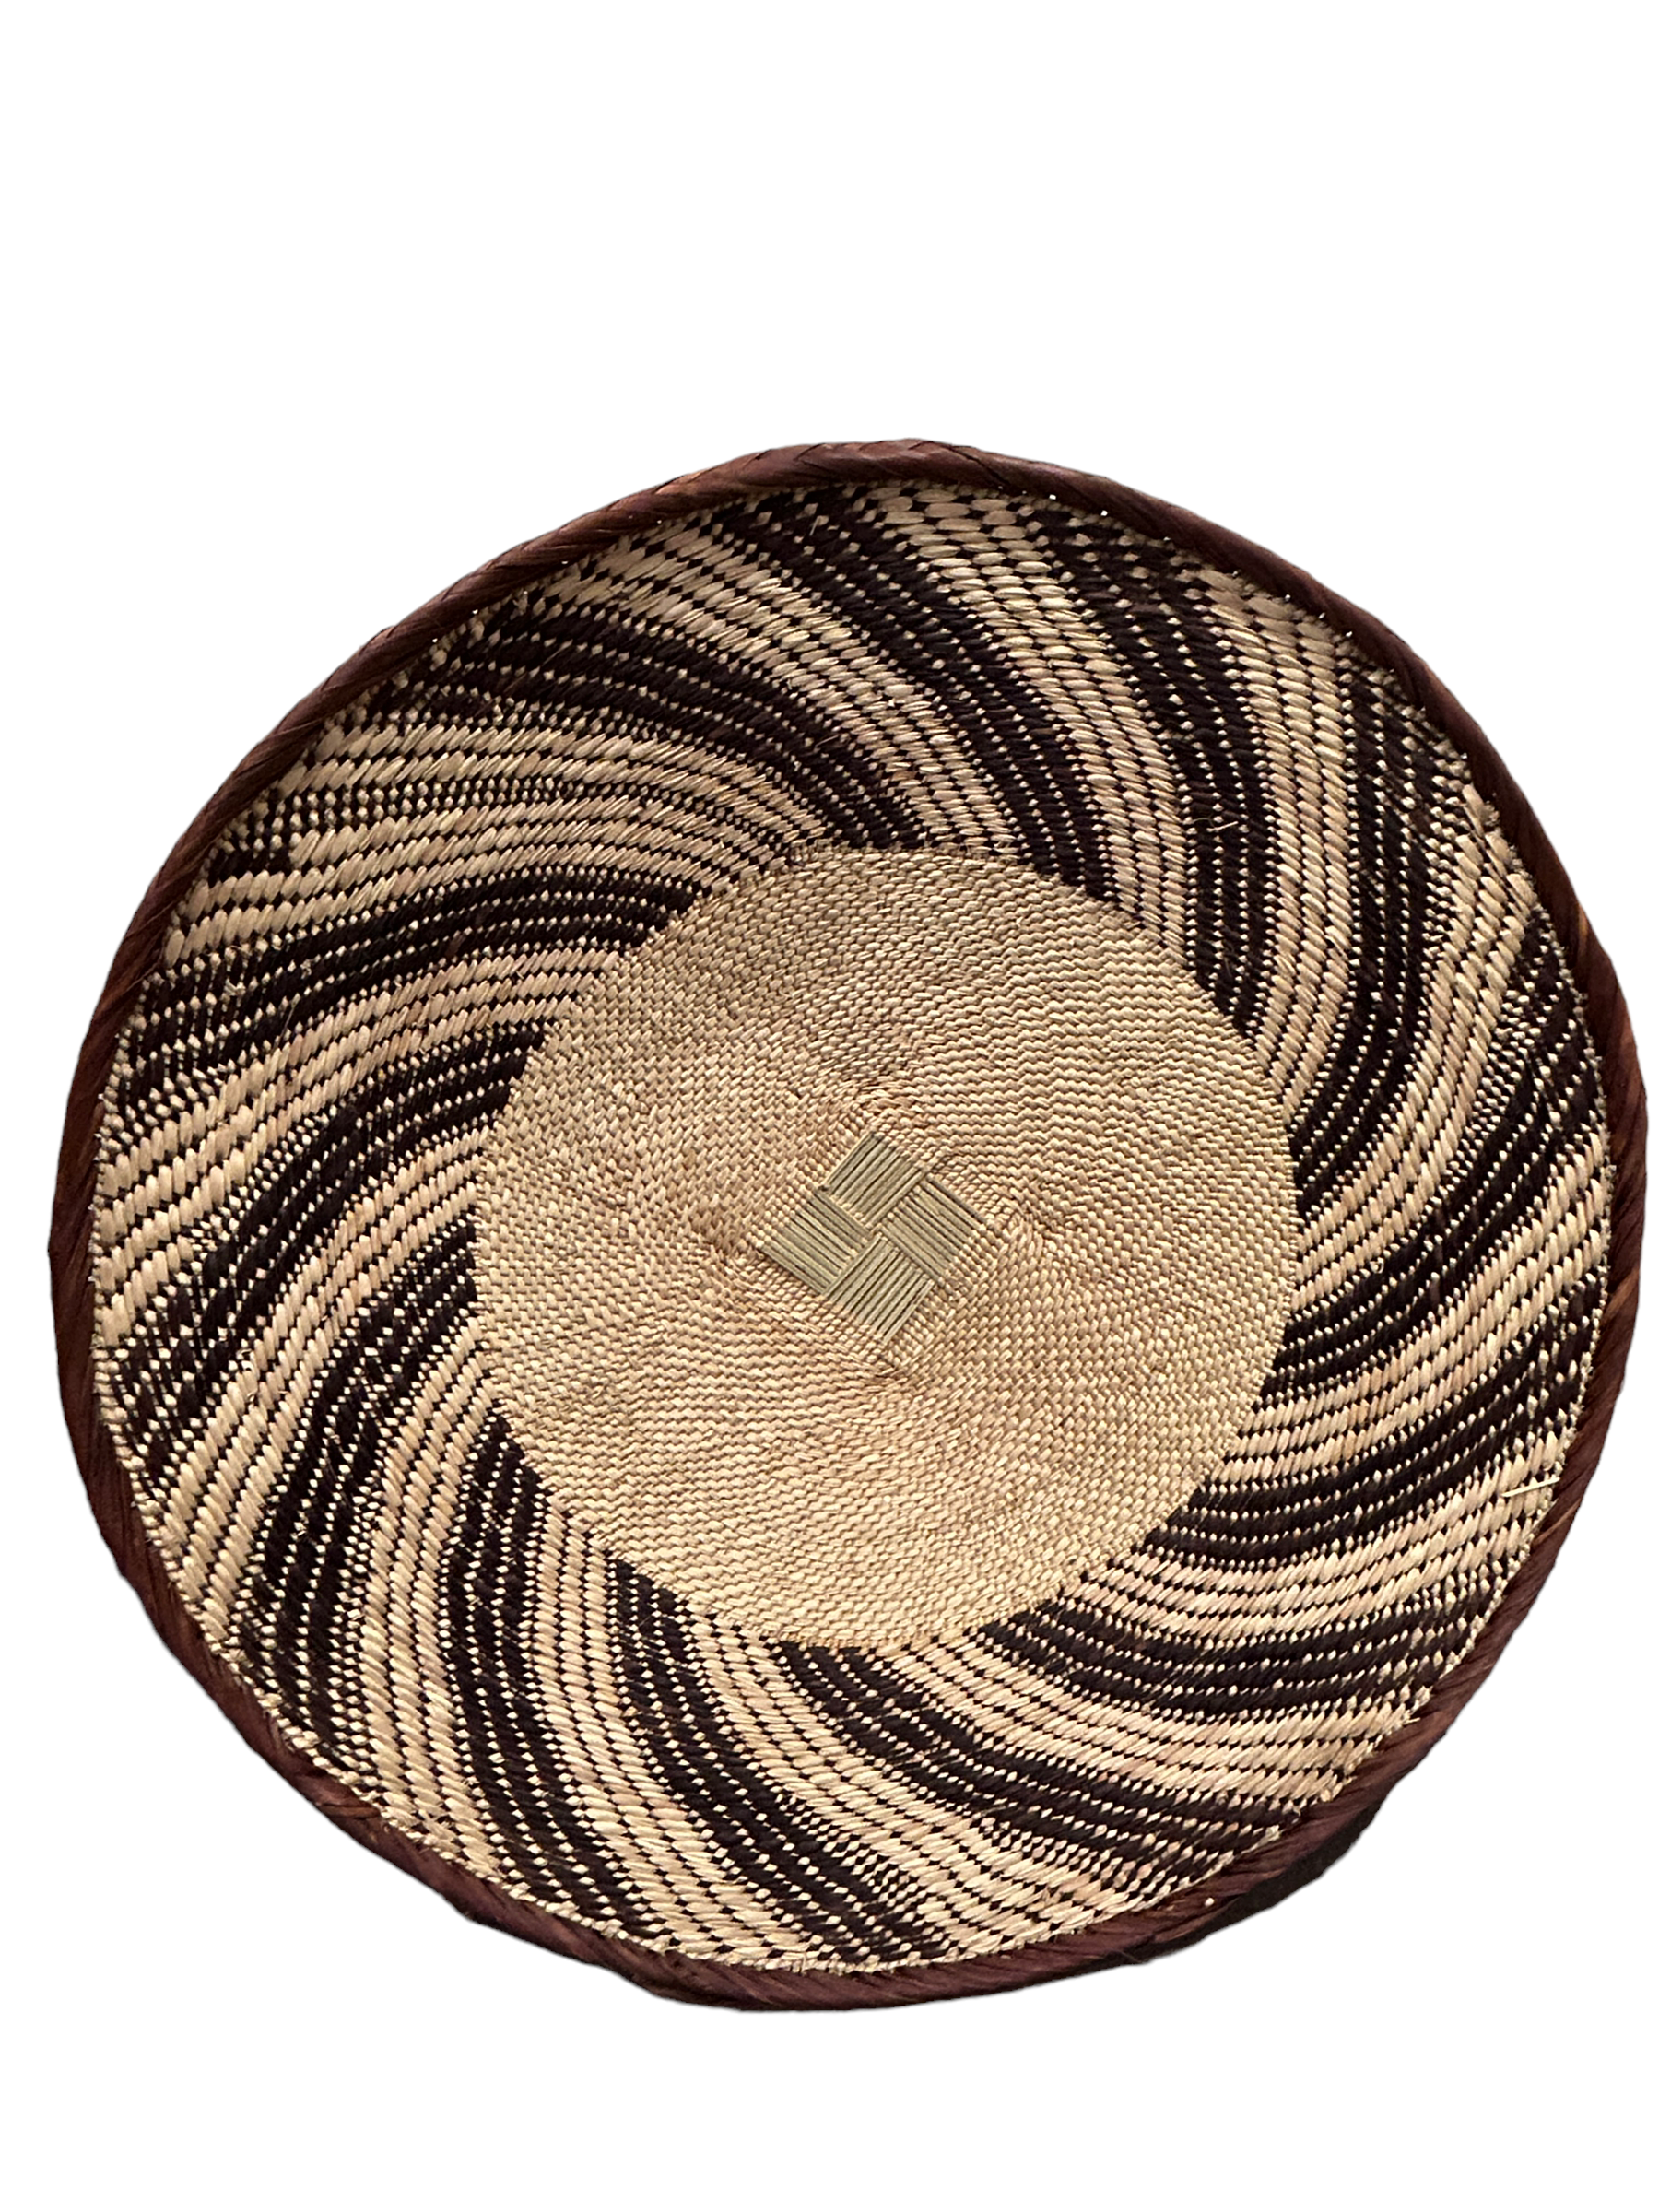 botanicalboysuk Tonga Basket Natural (55-03)